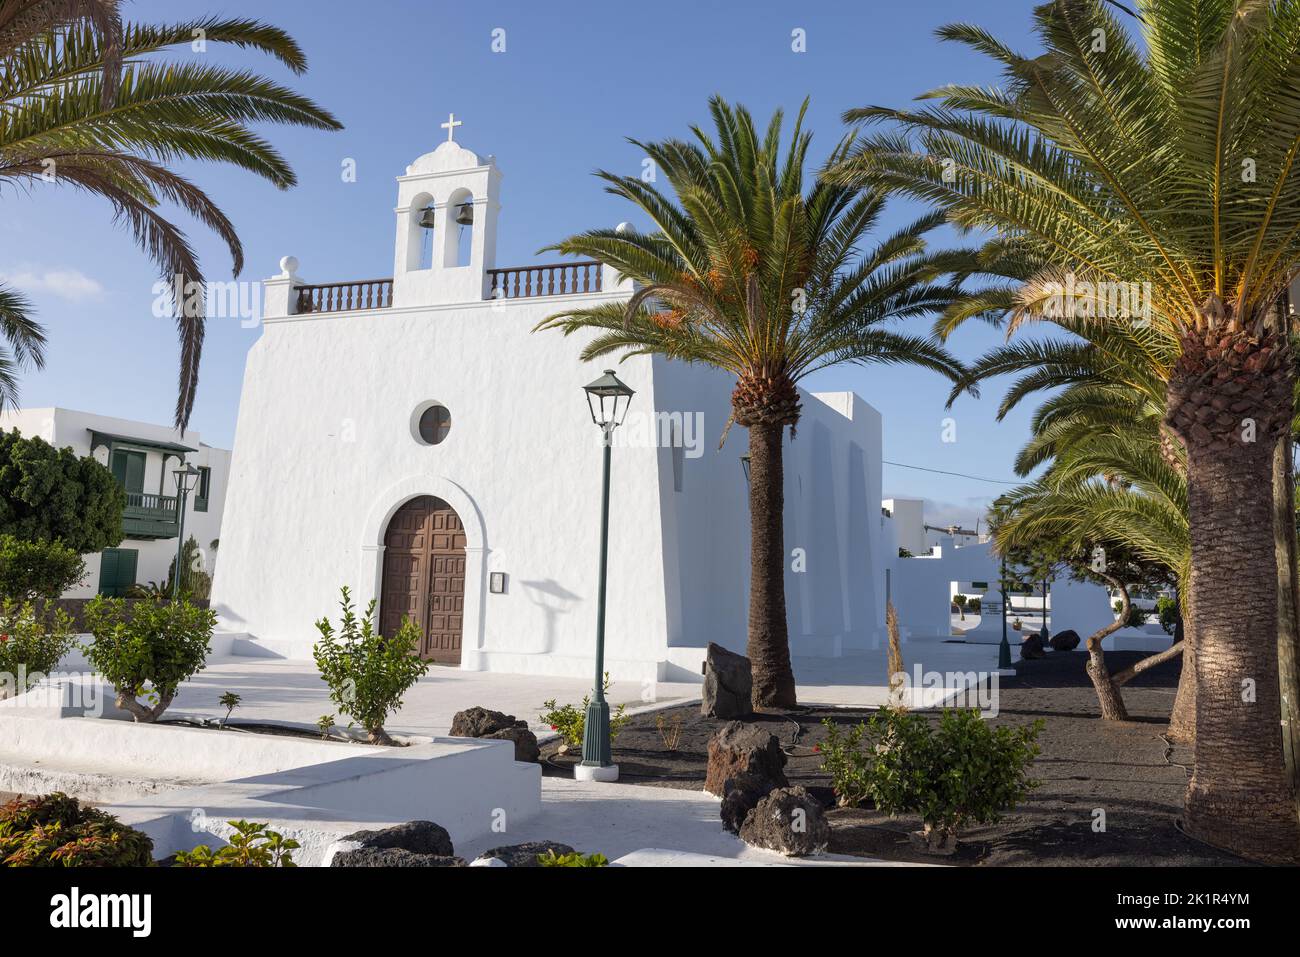 The church San Isidro Labrador in Uga on the Island of Lanzarote, Spain. Stock Photo